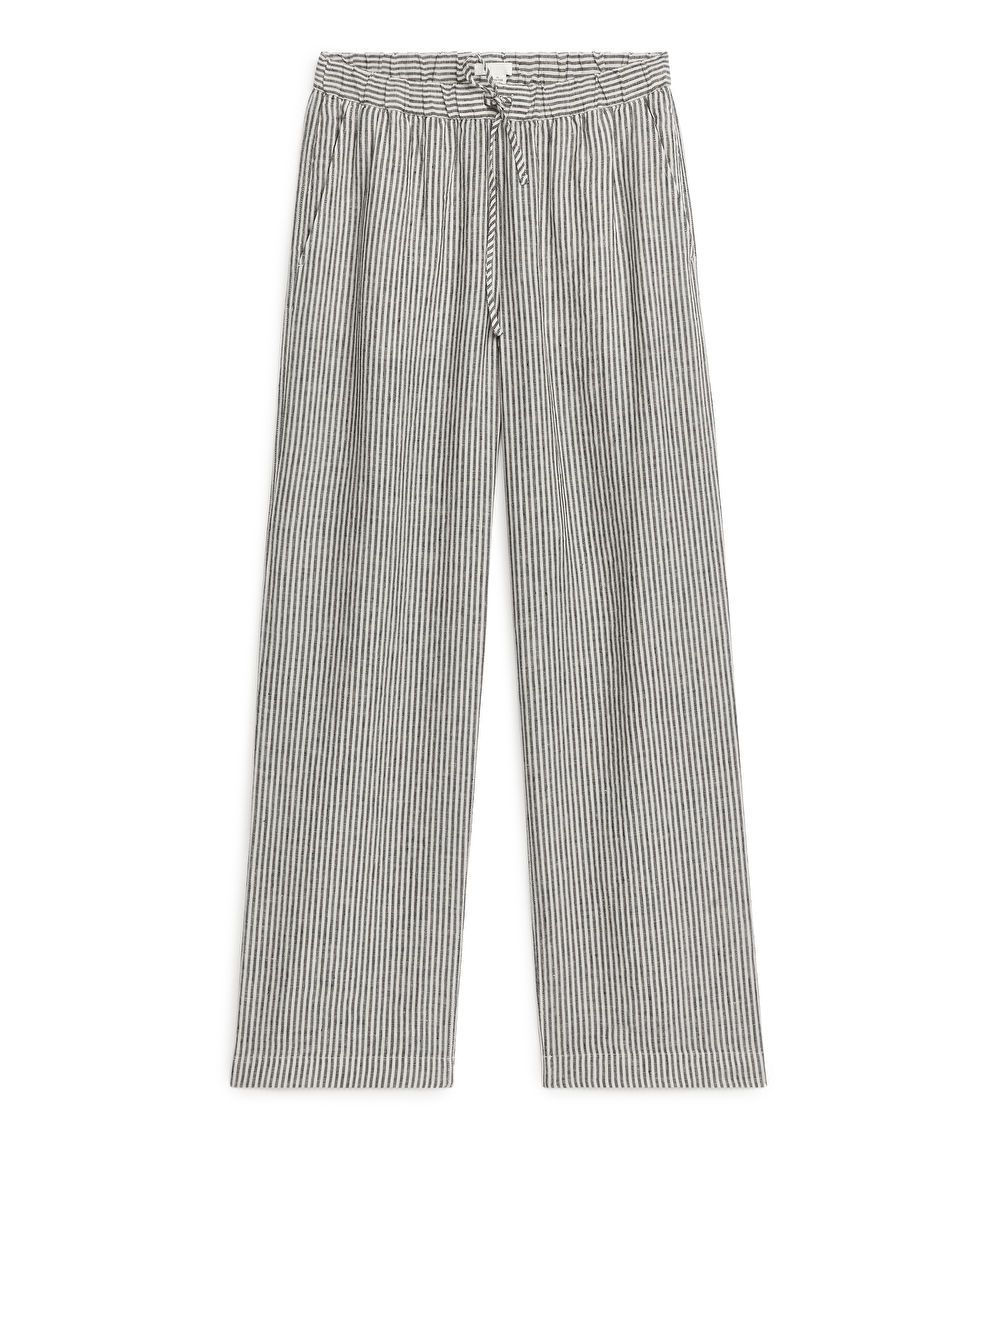 Pantalon en lin avec cordon de serrage | ARKET